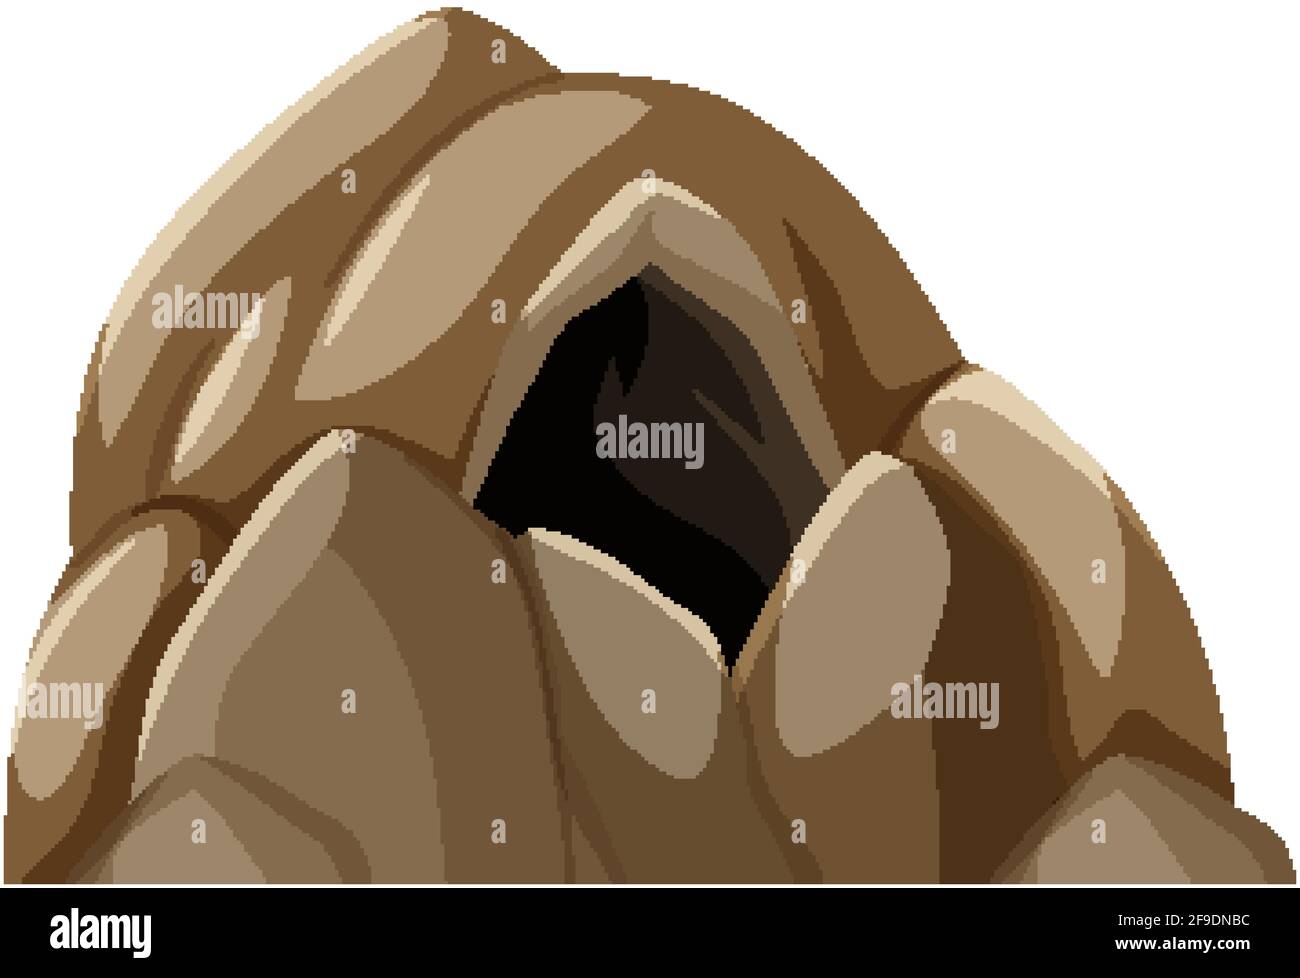 Isolated stone cave on white background illustration Stock Vector Image ...